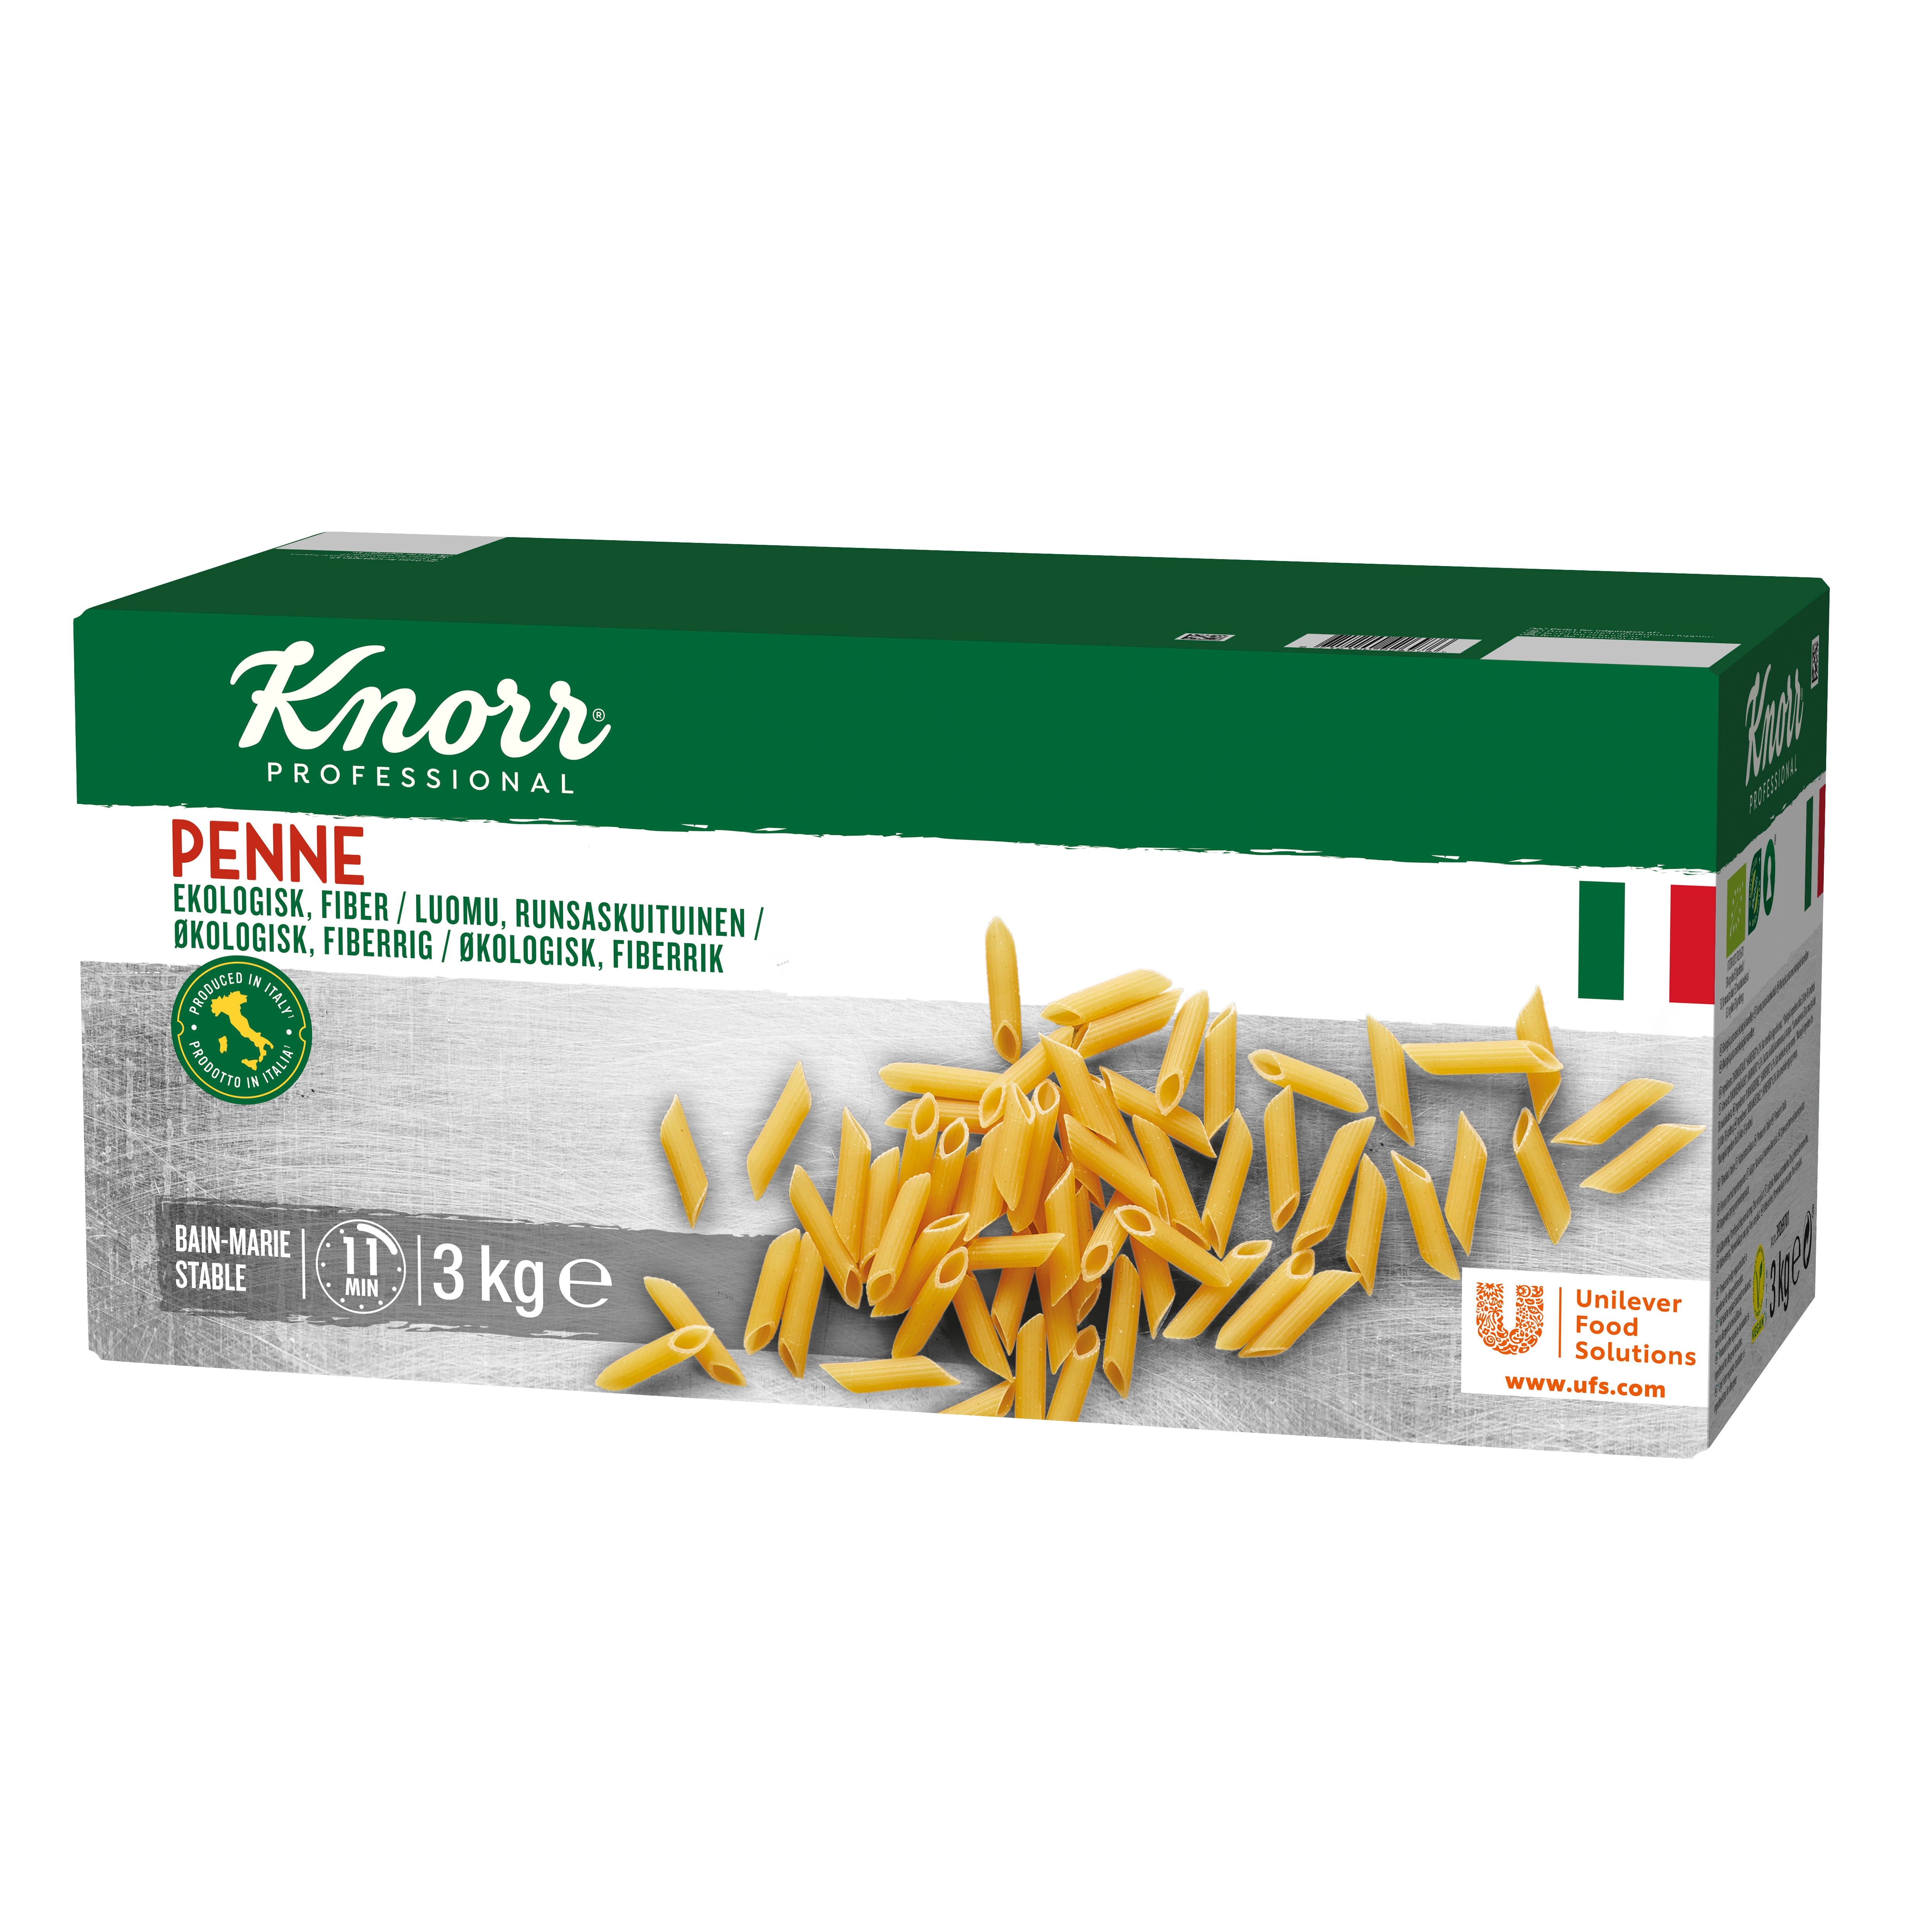 Knorr Penne Luomu, runsaskuituinen 3 kg - 